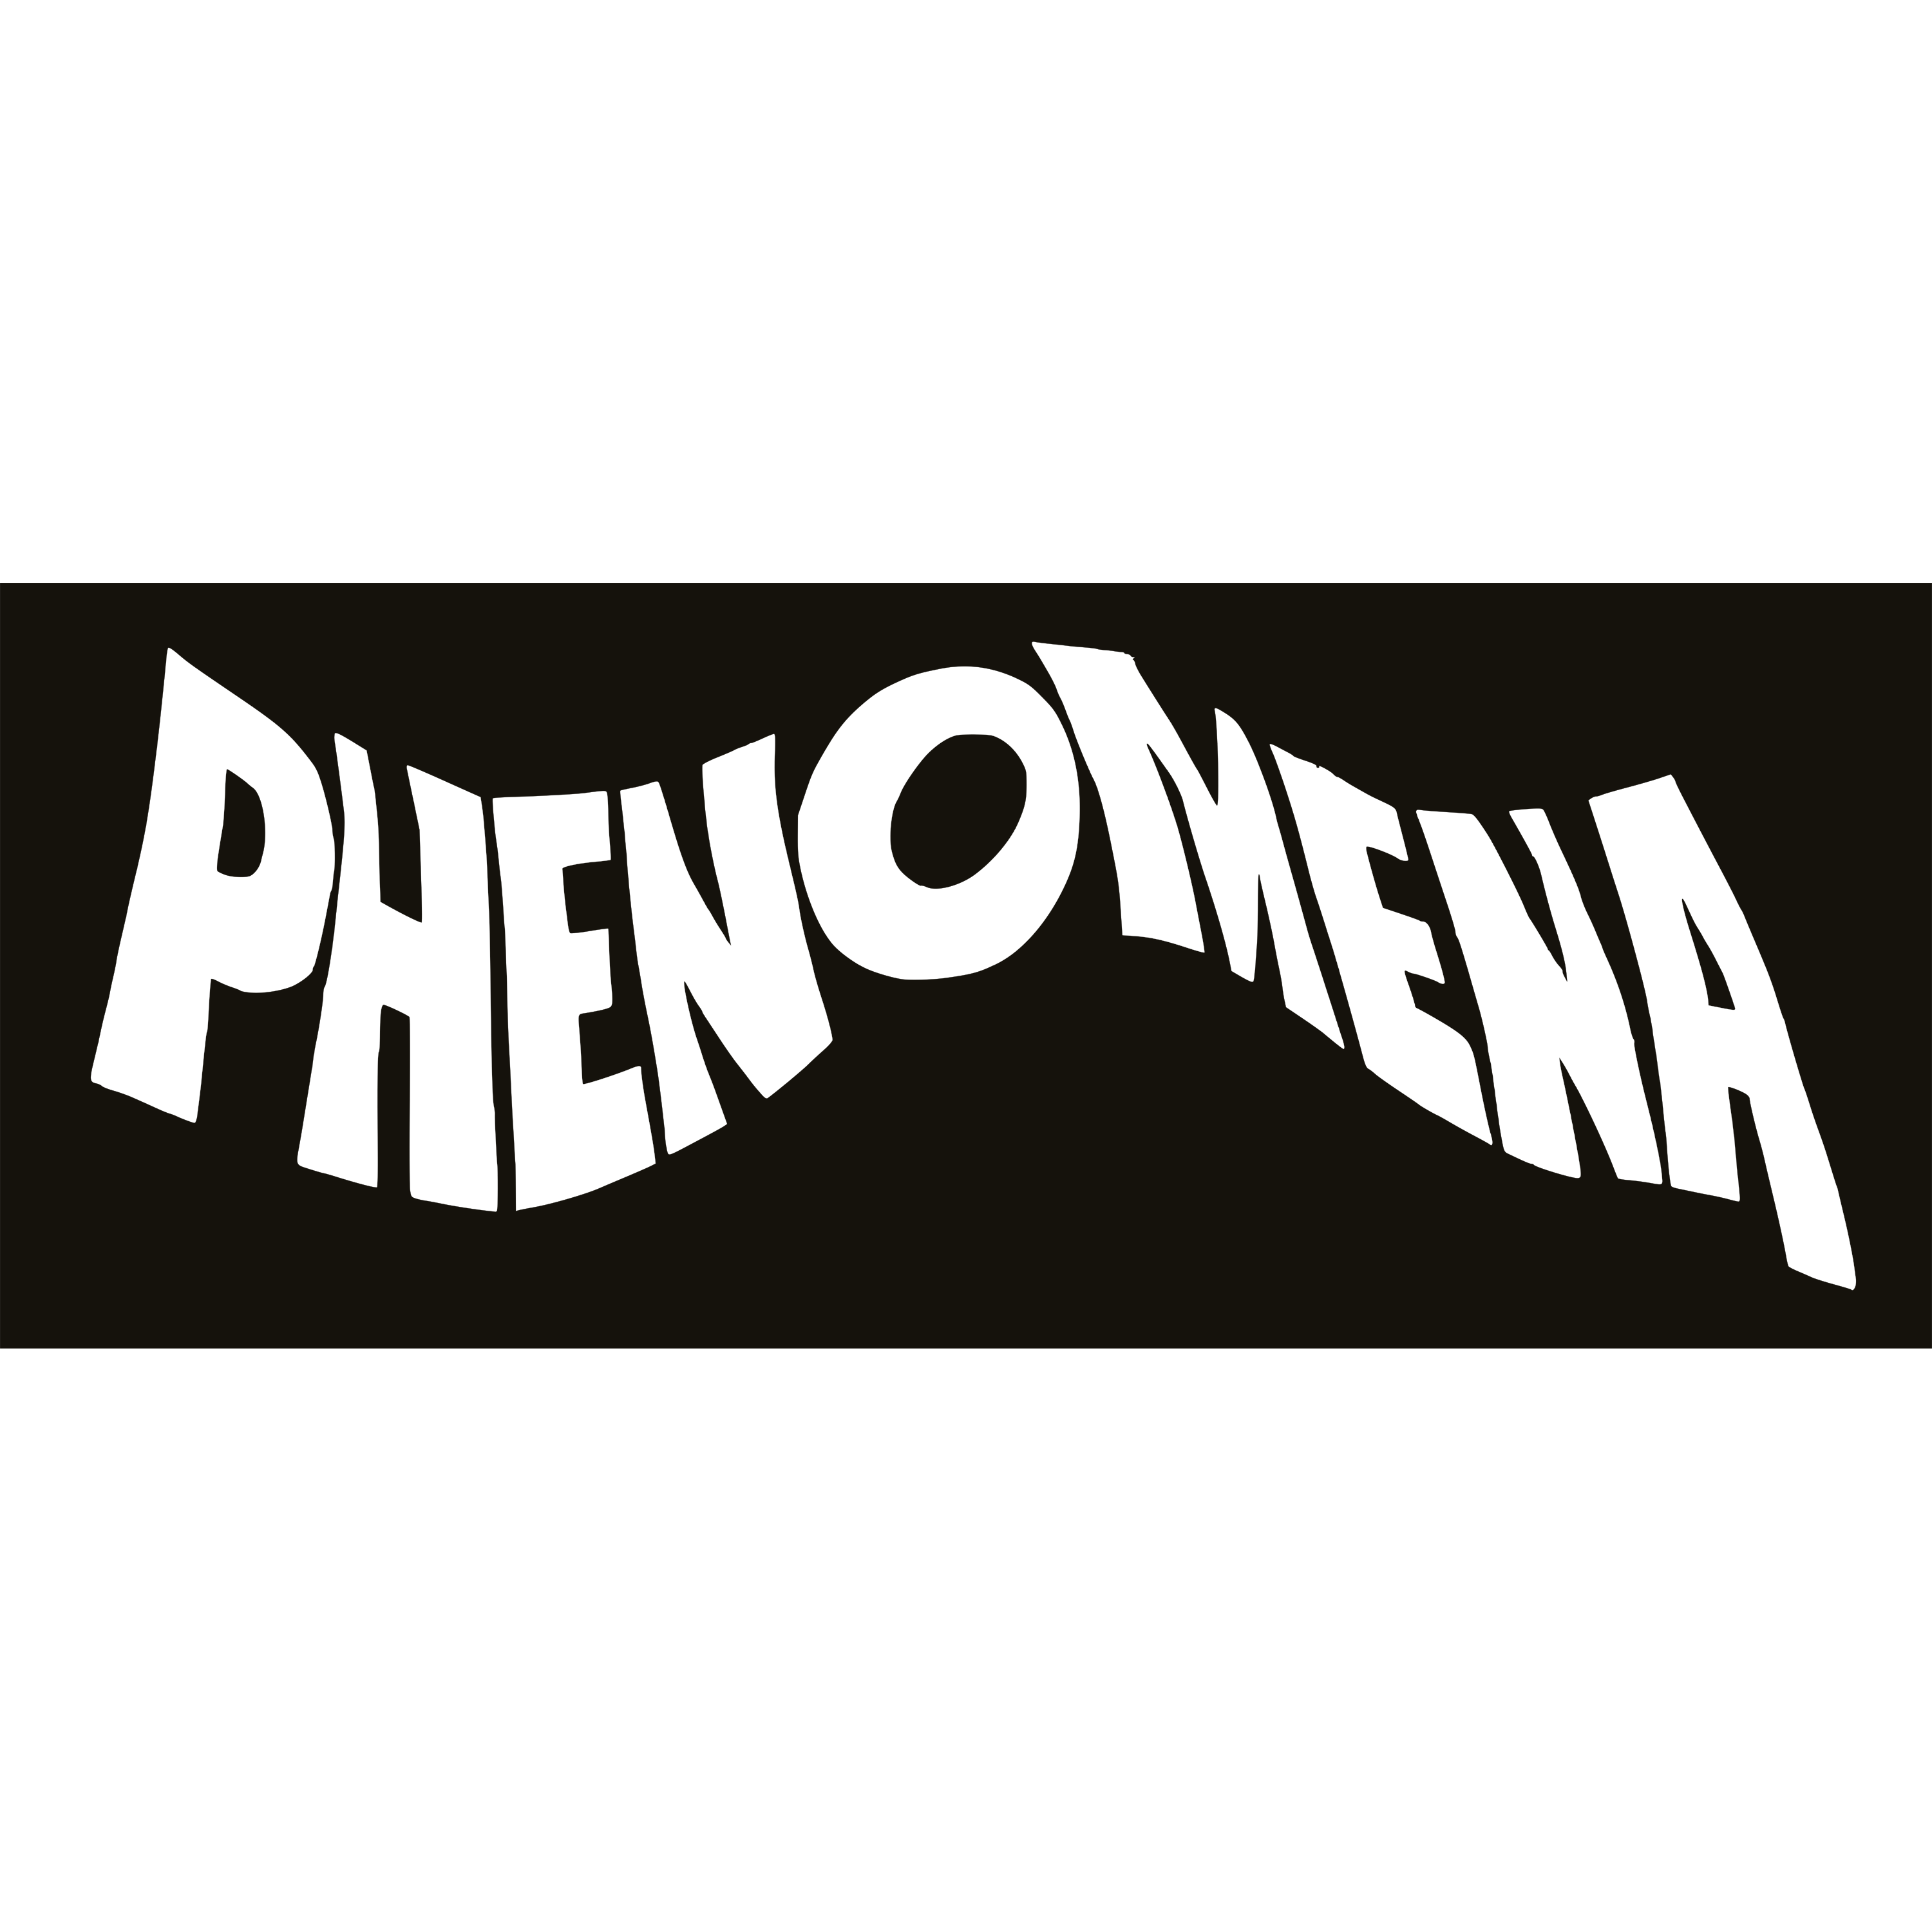 Phenomena Logo Transparent Image